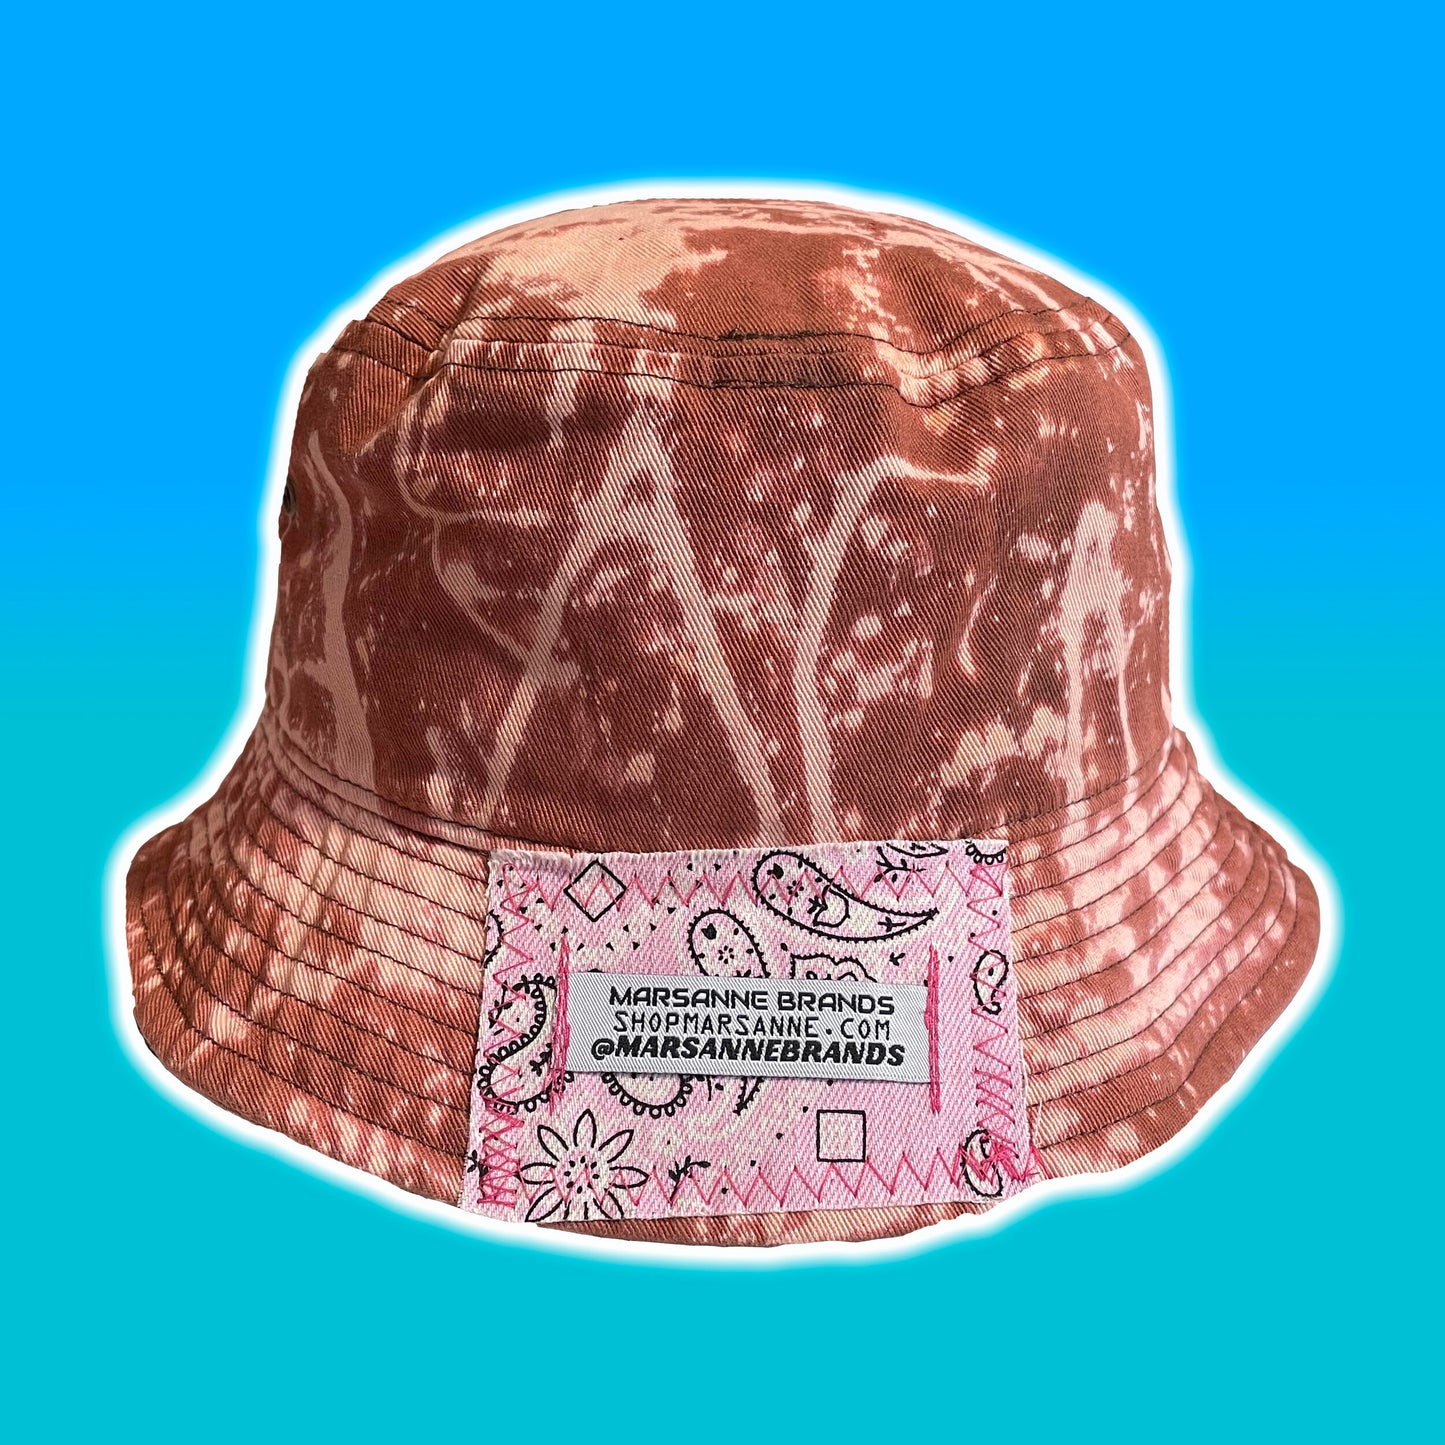 CHOCOLATE SPLASH BUCKET HAT